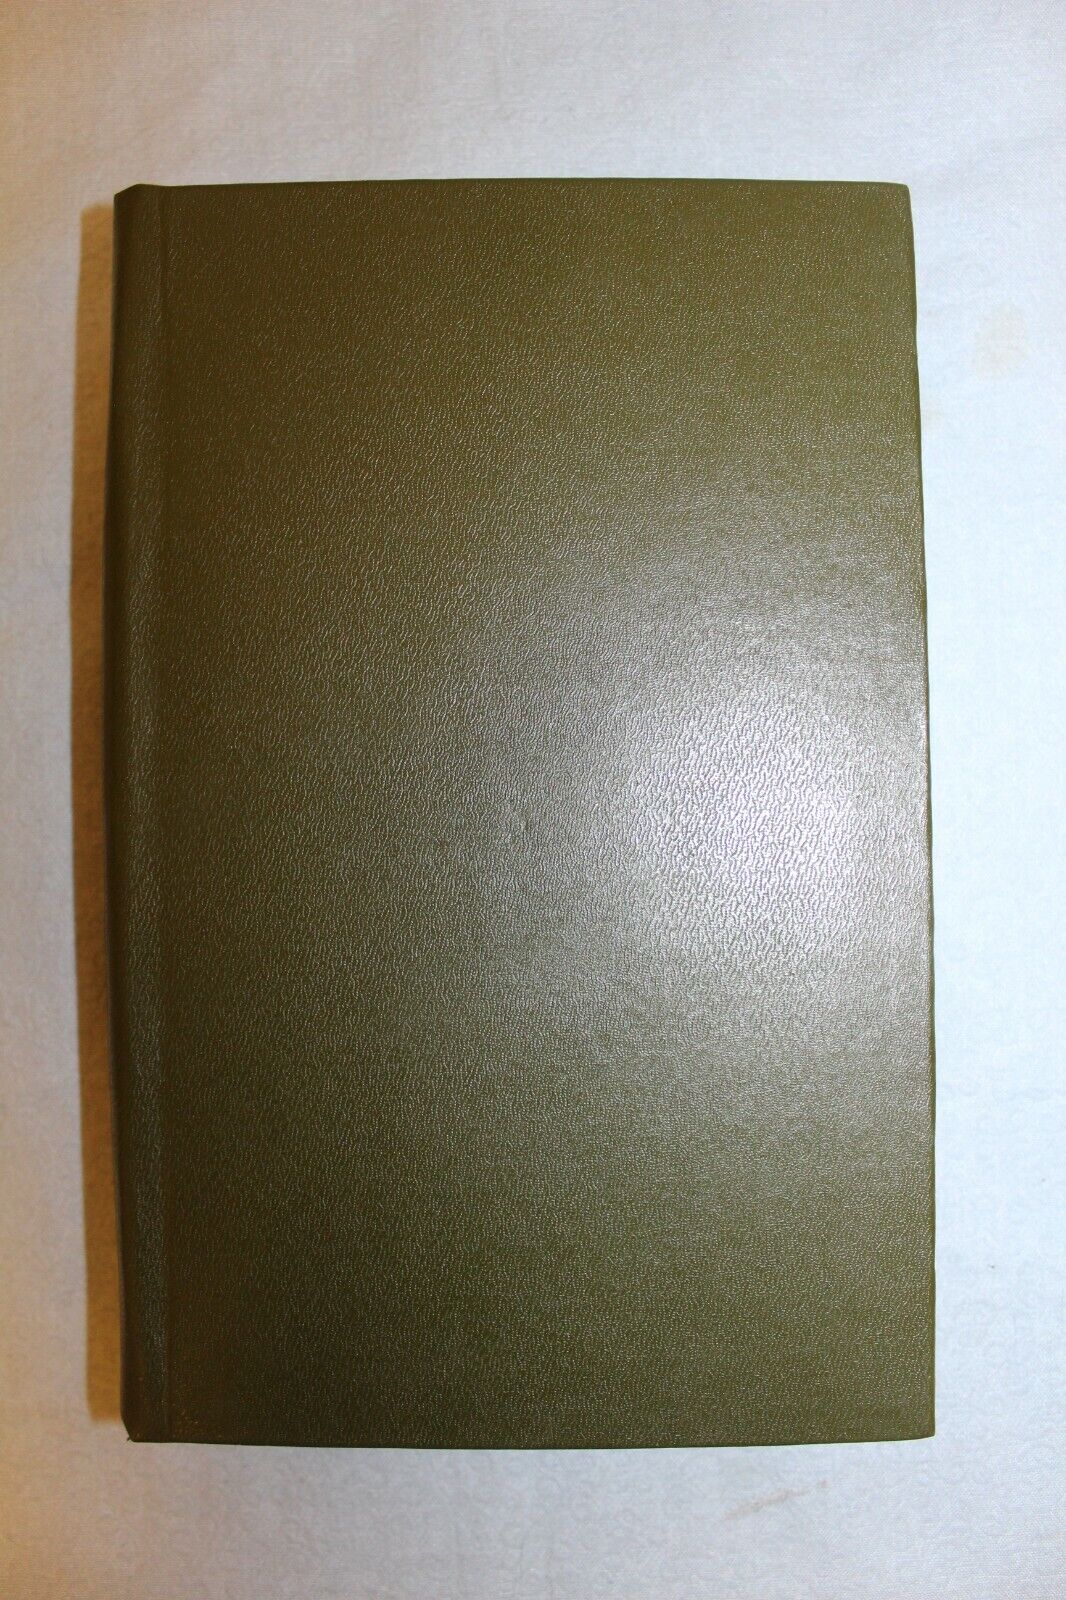 11305.Georgian Chess Book: Akobia. World Anthology of Chess Studies. Vol. 3